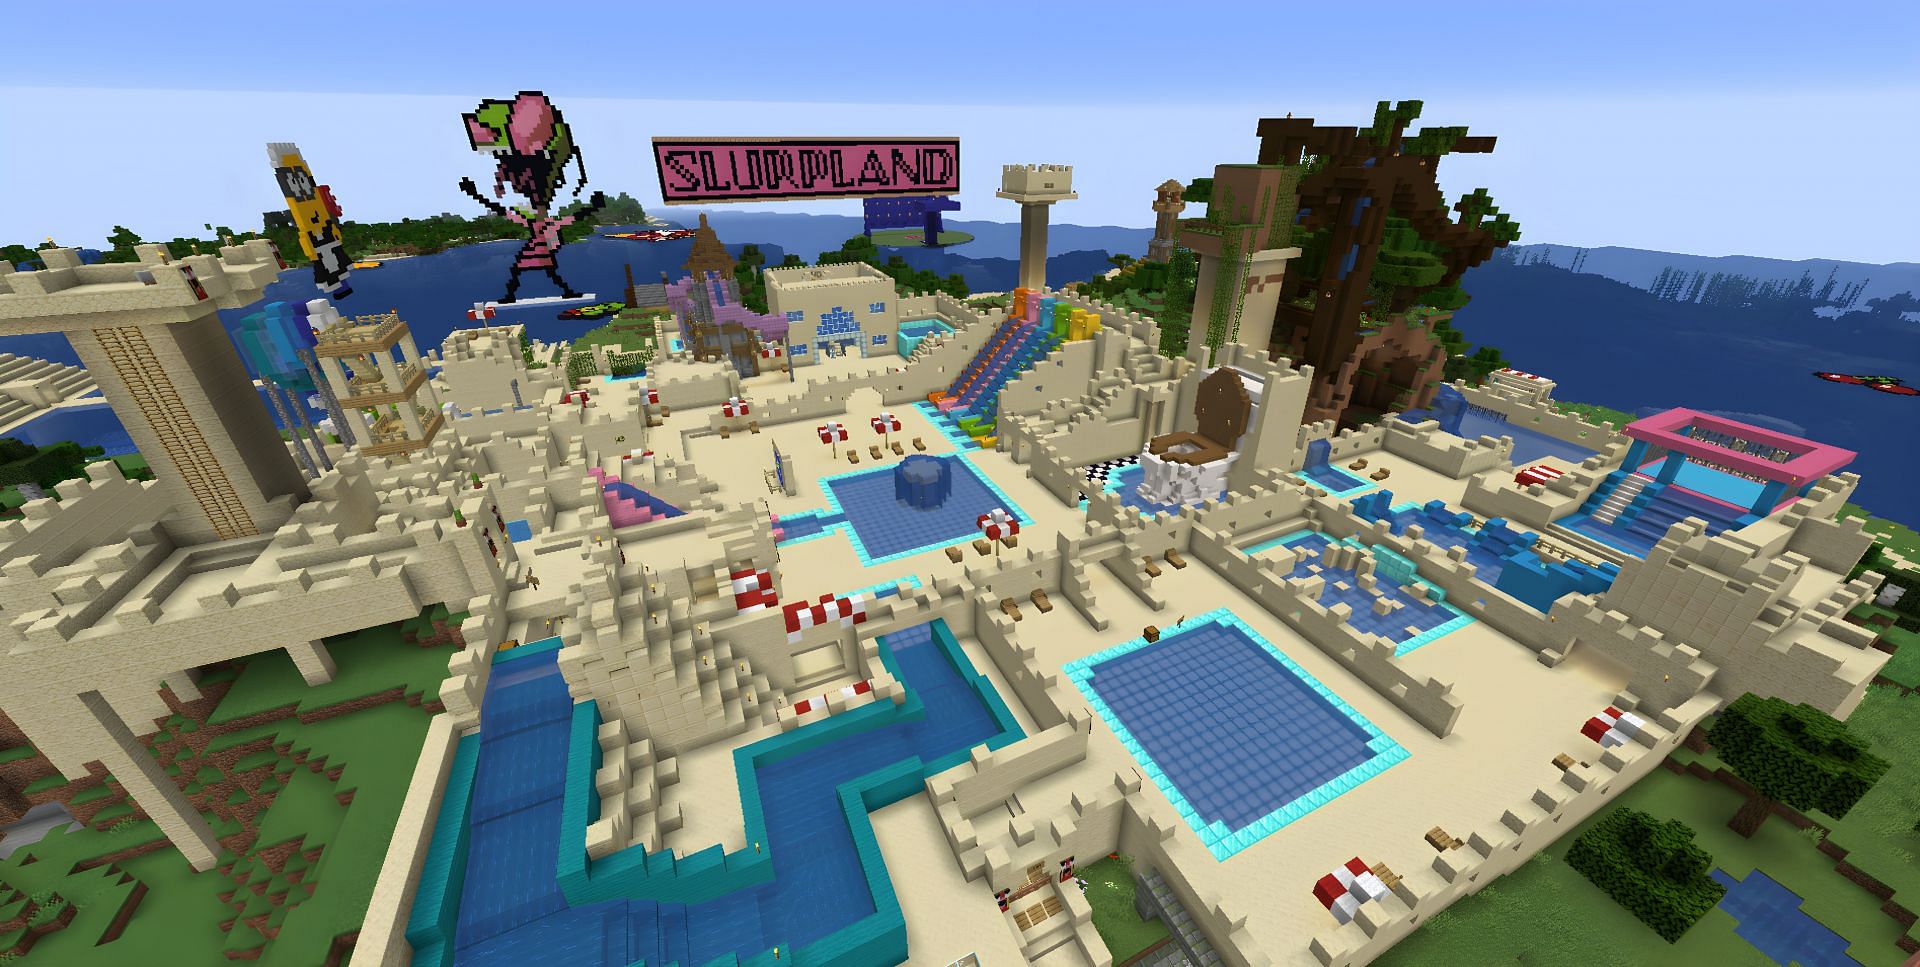 Minecraft water parks can offer tons of entertainment (Image via Reddit/u/Slurpwis)